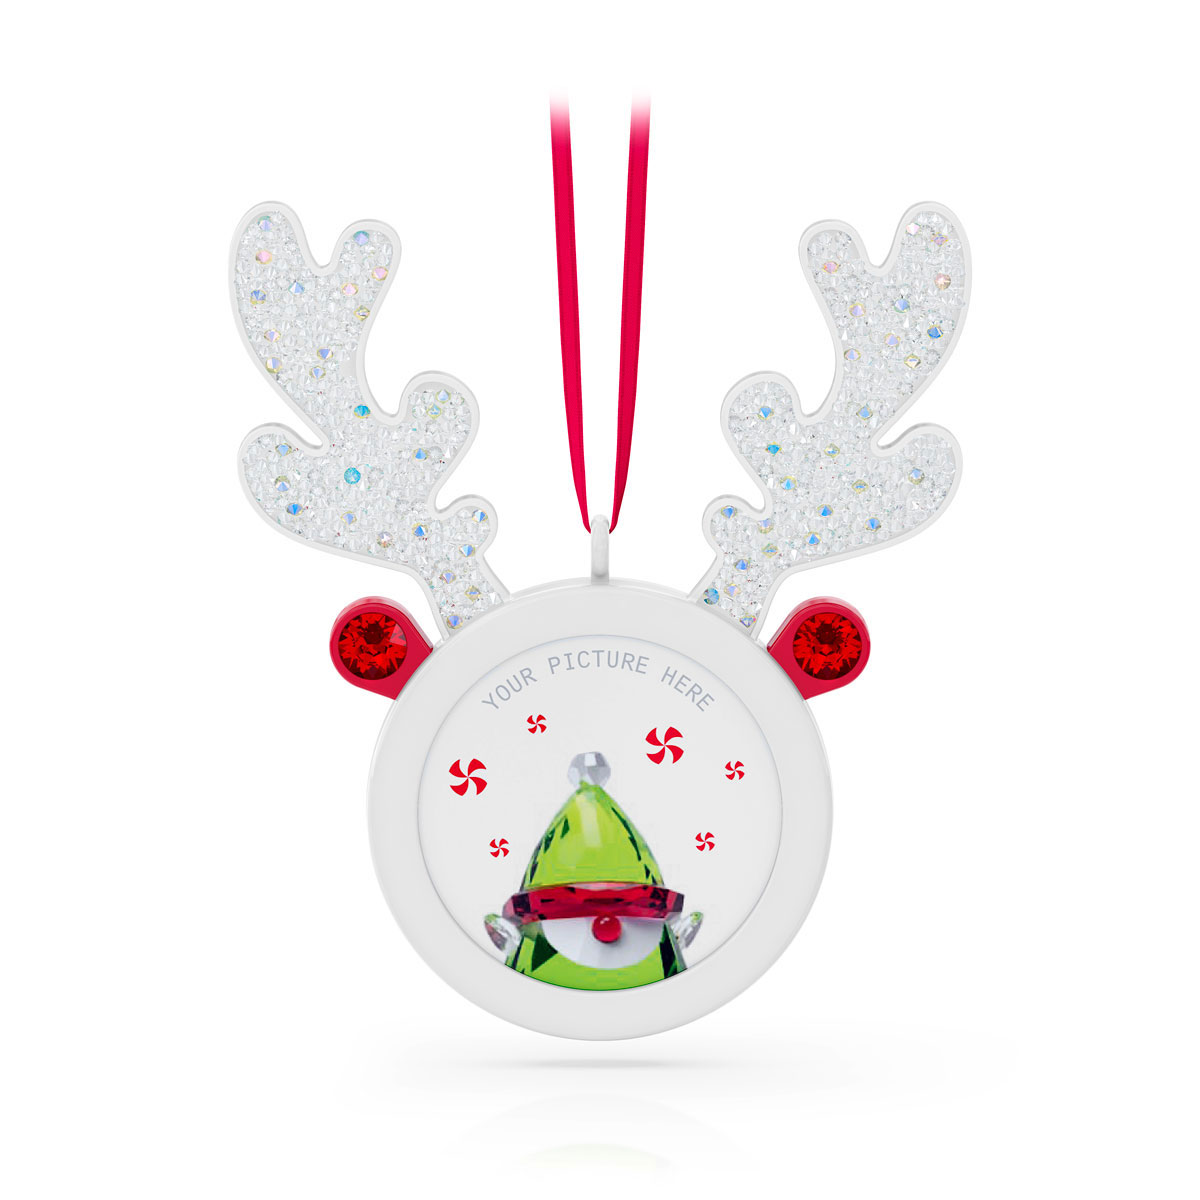 Swarovski Holiday Cheers Picture Holder Reindeer Ornament